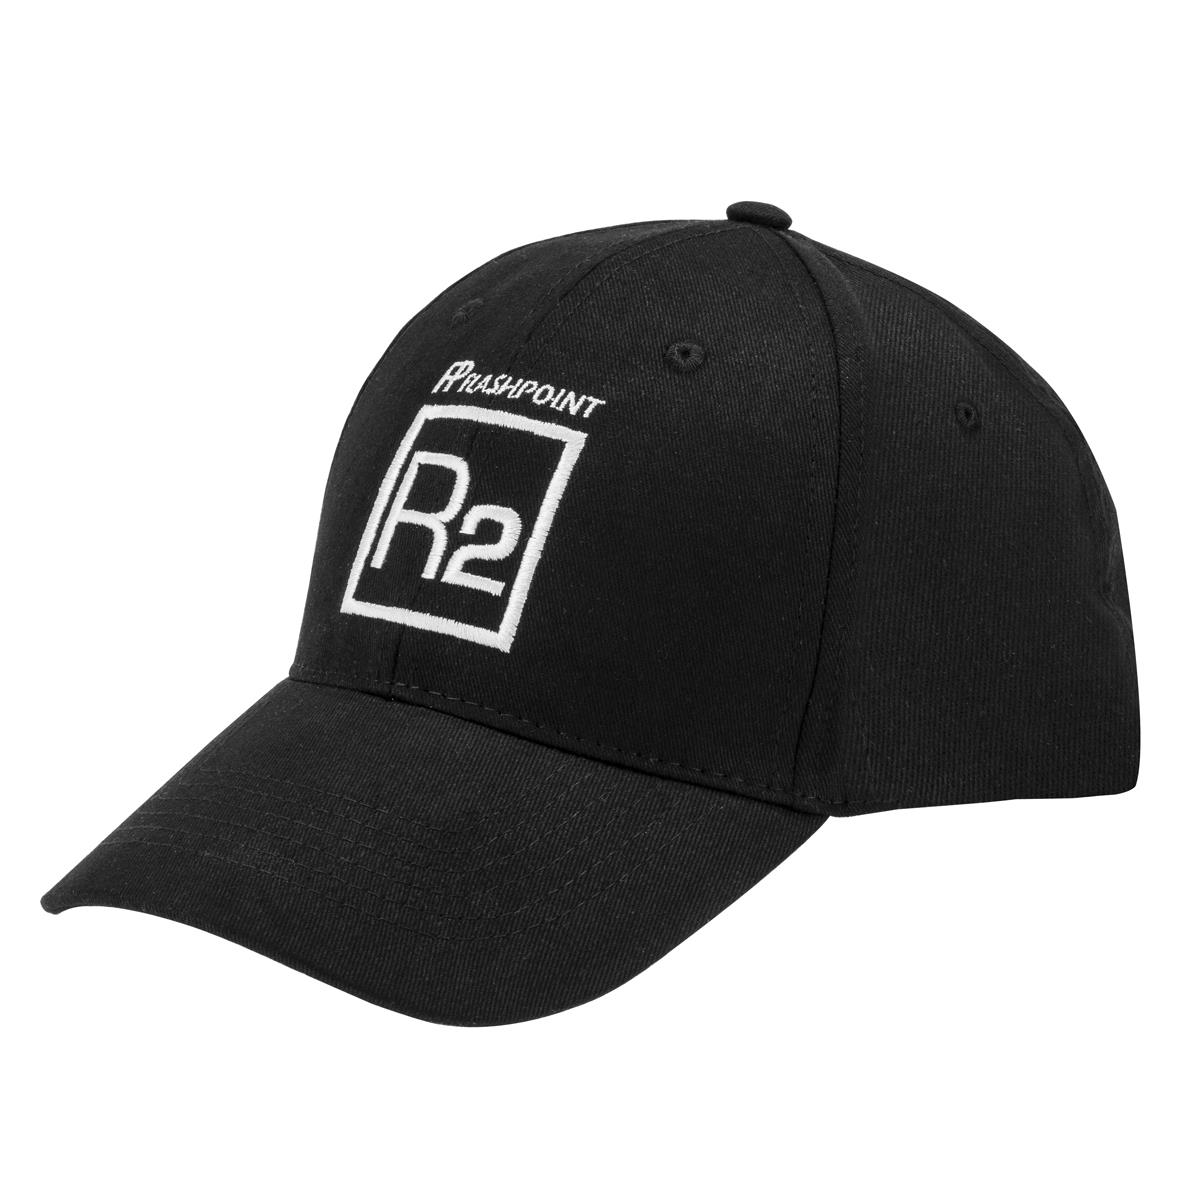 Image of Flashpoint R2 Photographer's Baseball Cap (Black)